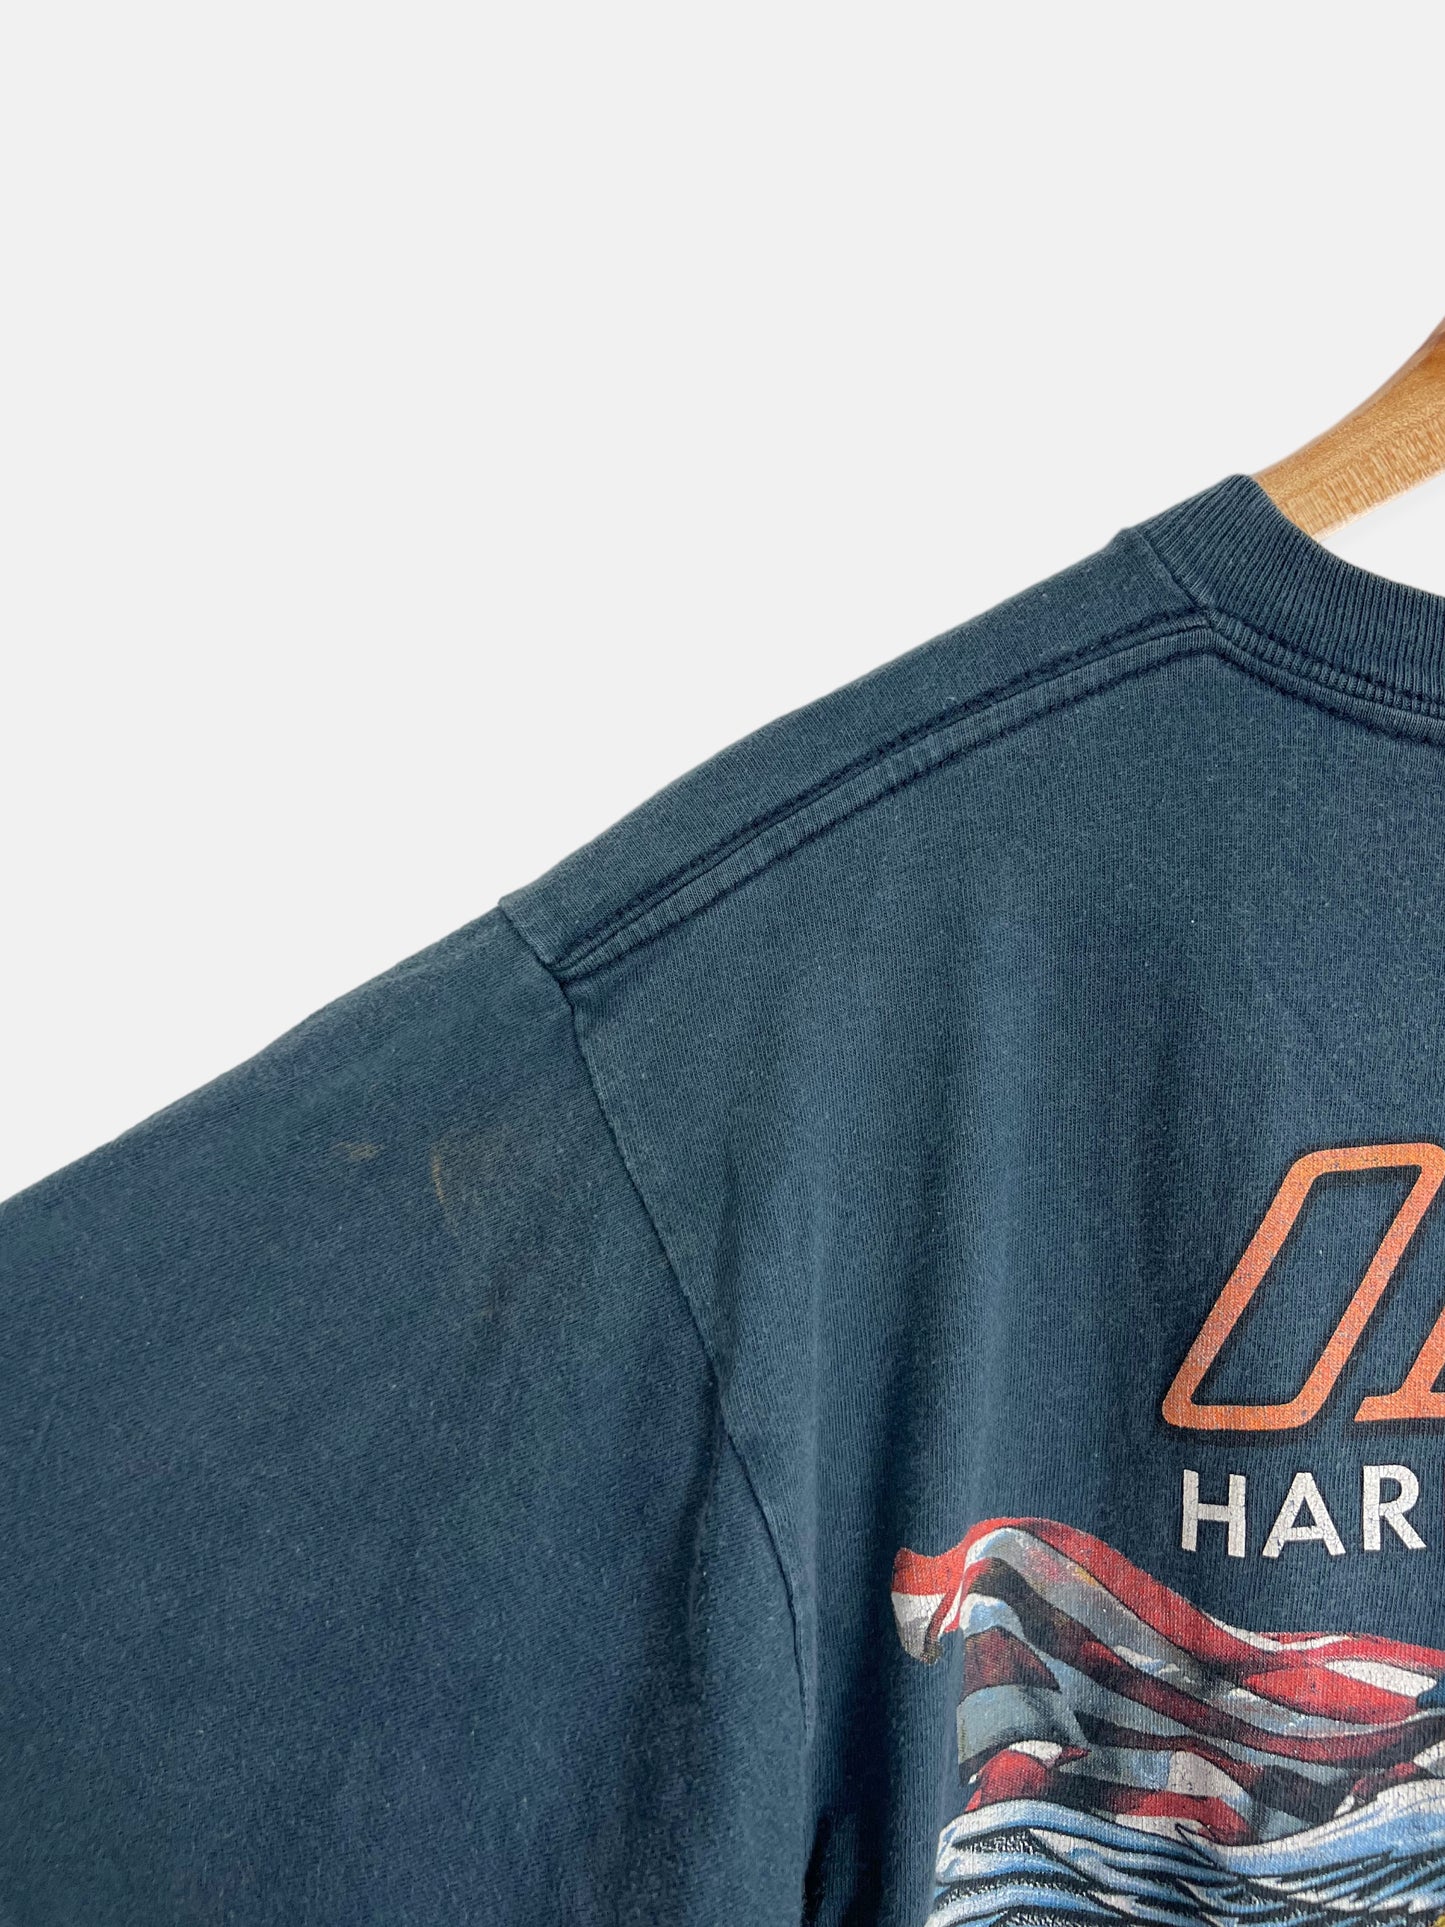 90's Harley Davidson Florida USA Made Vintage T-Shirt Size 10-12